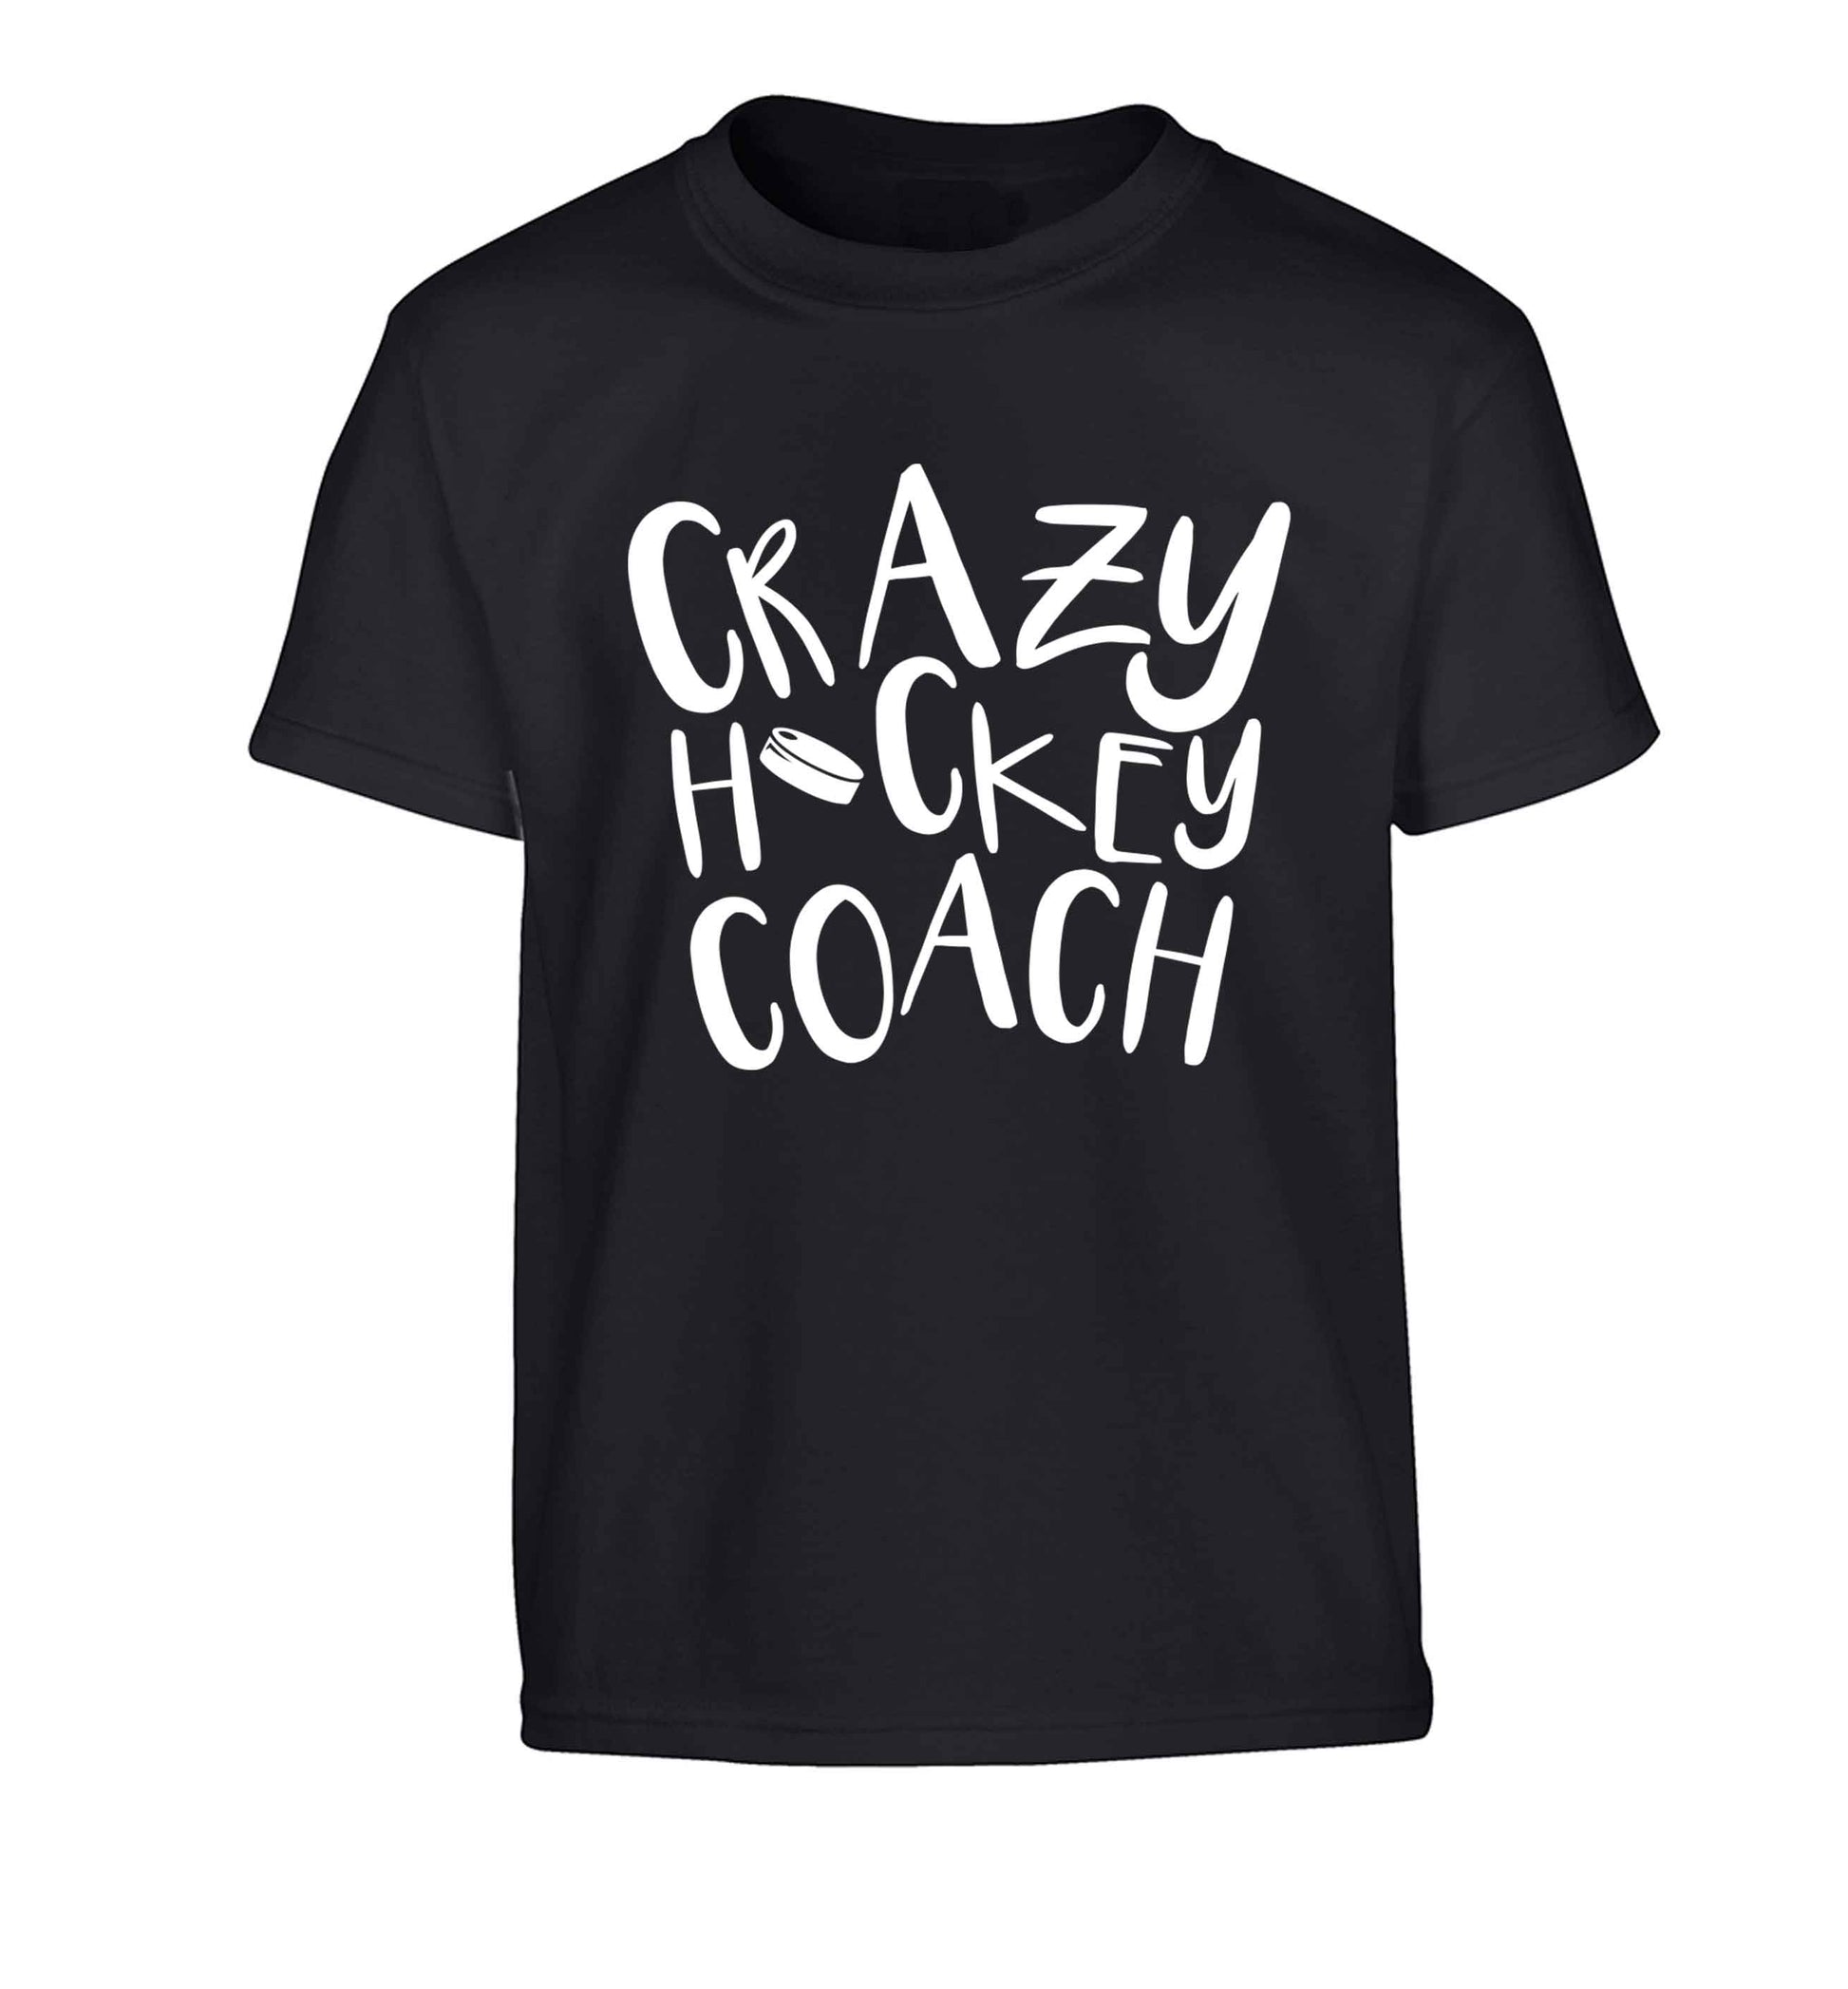 Crazy hockey coach Children's black Tshirt 12-13 Years